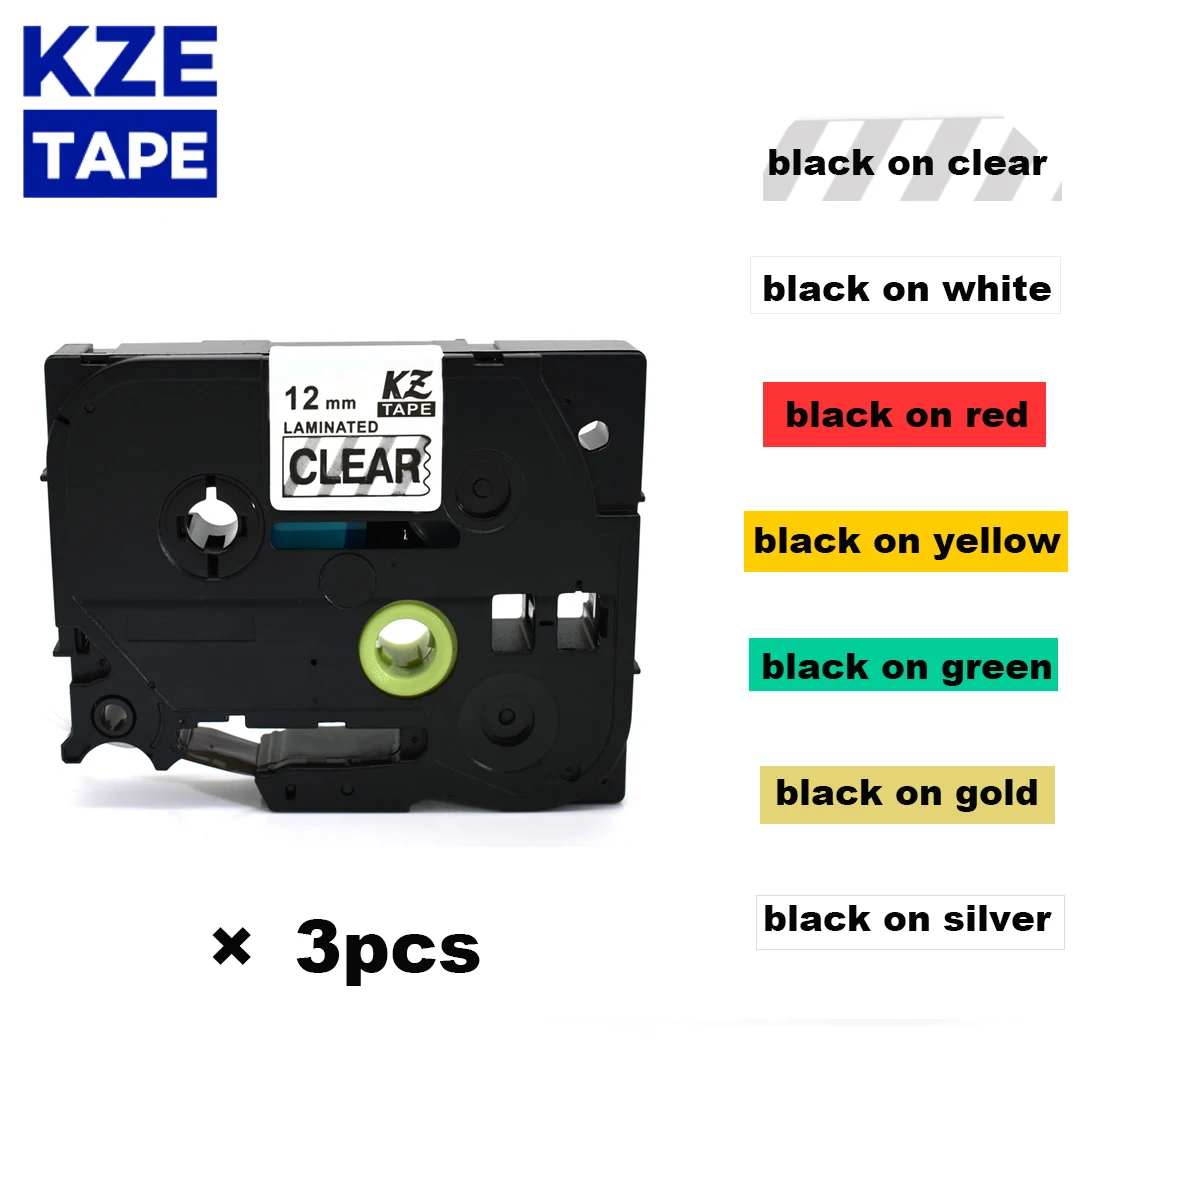 

KZE 12mm 3PCS black word Laminated Cassette Cartridge ribbon compatible brother p-touch printers Tze131 231 431 Tz label tape